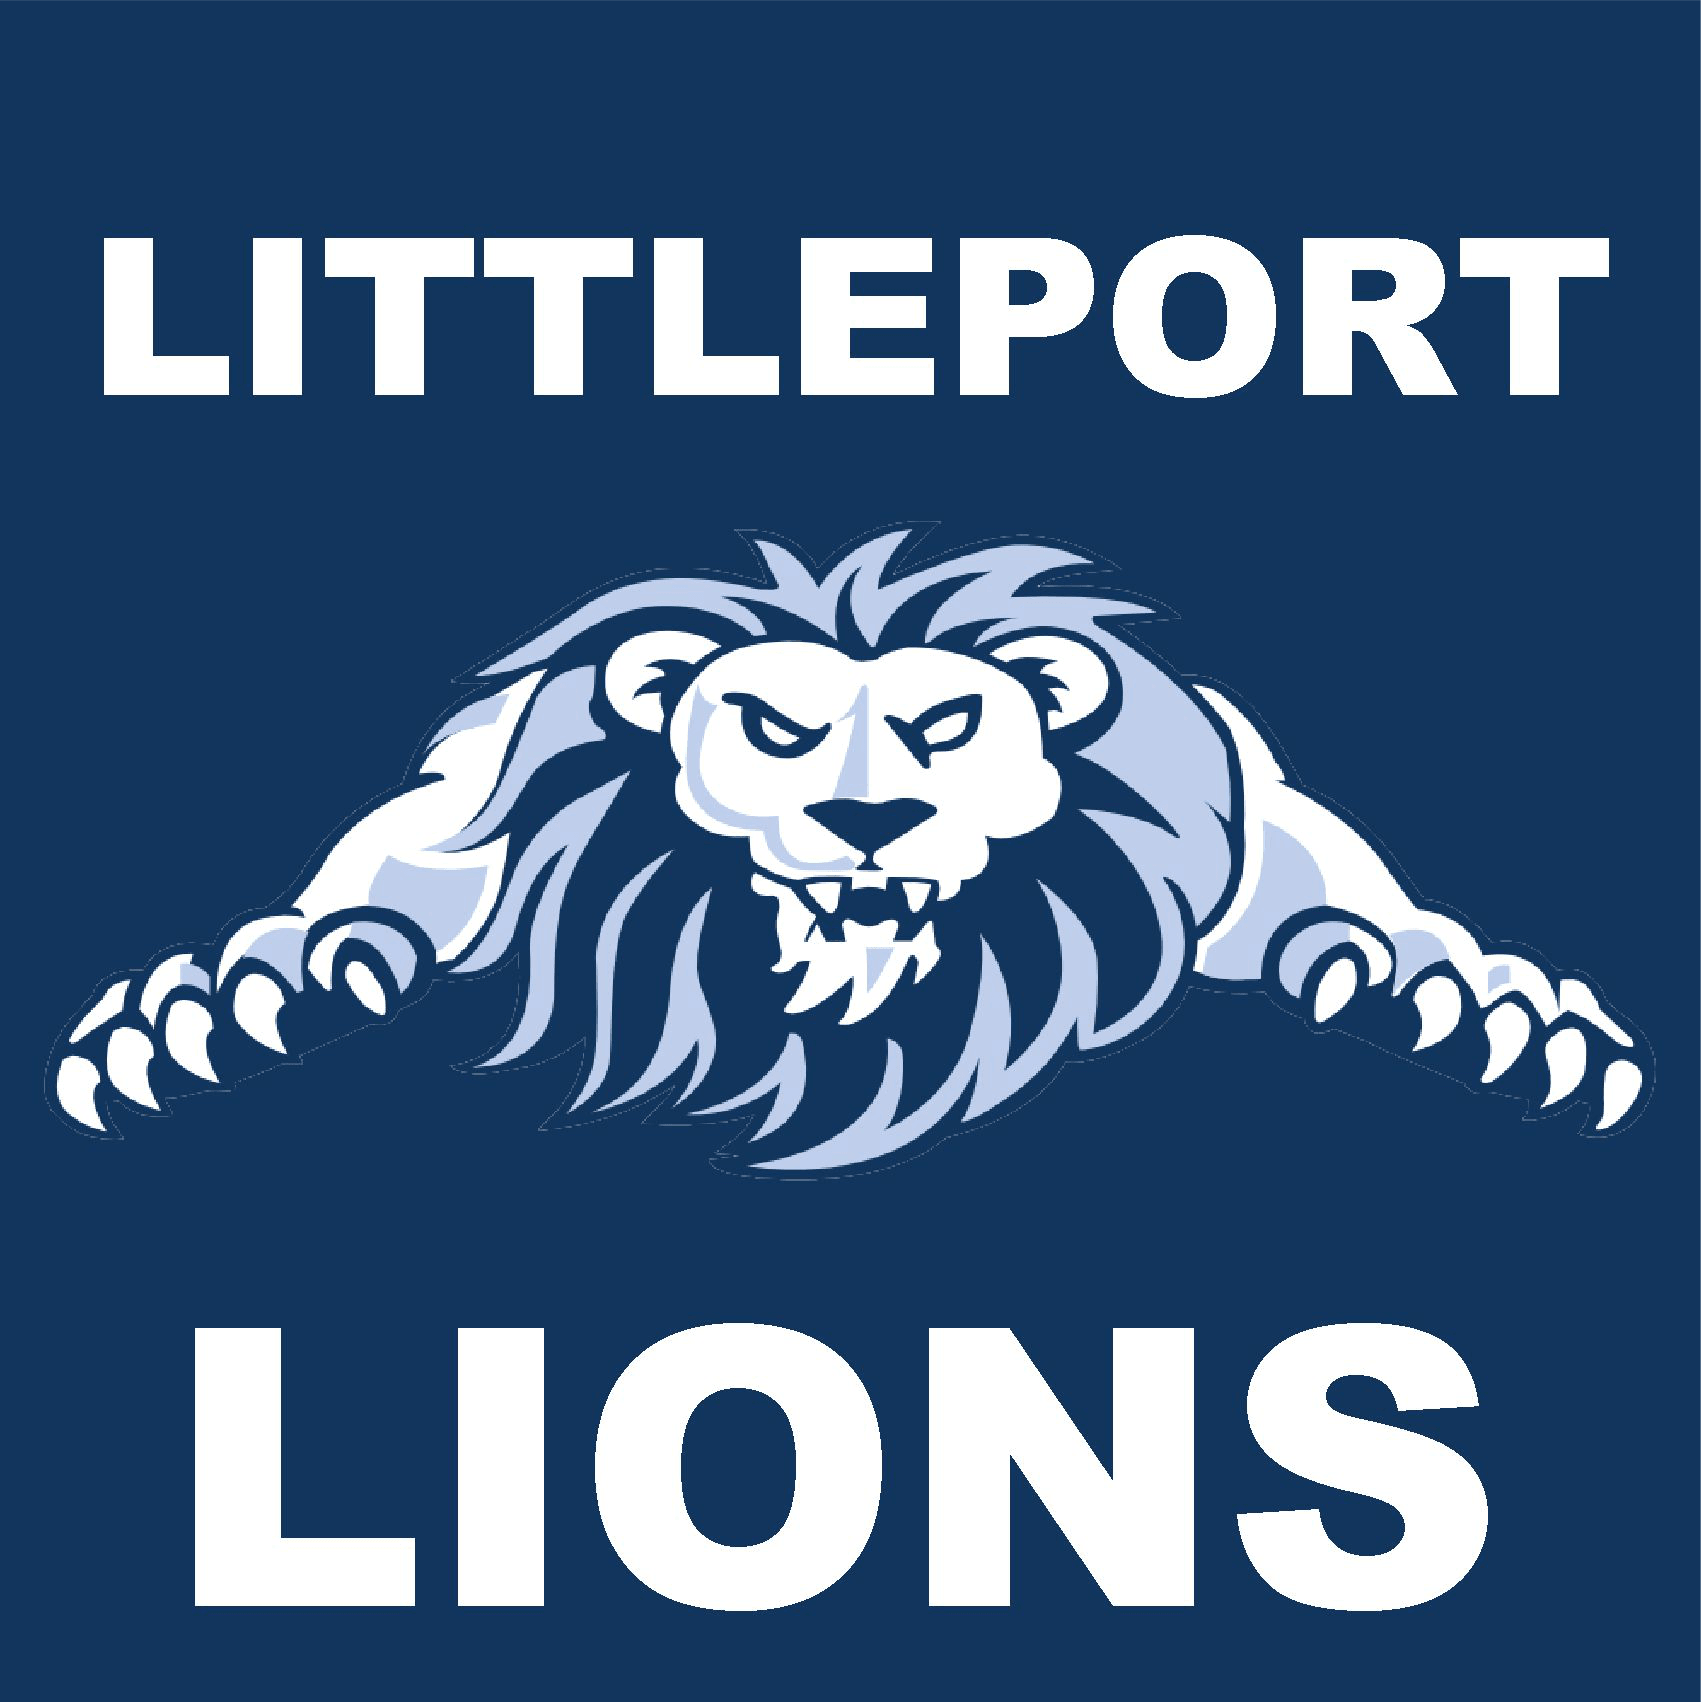 Littleport lions korfball logo sigma embroidery